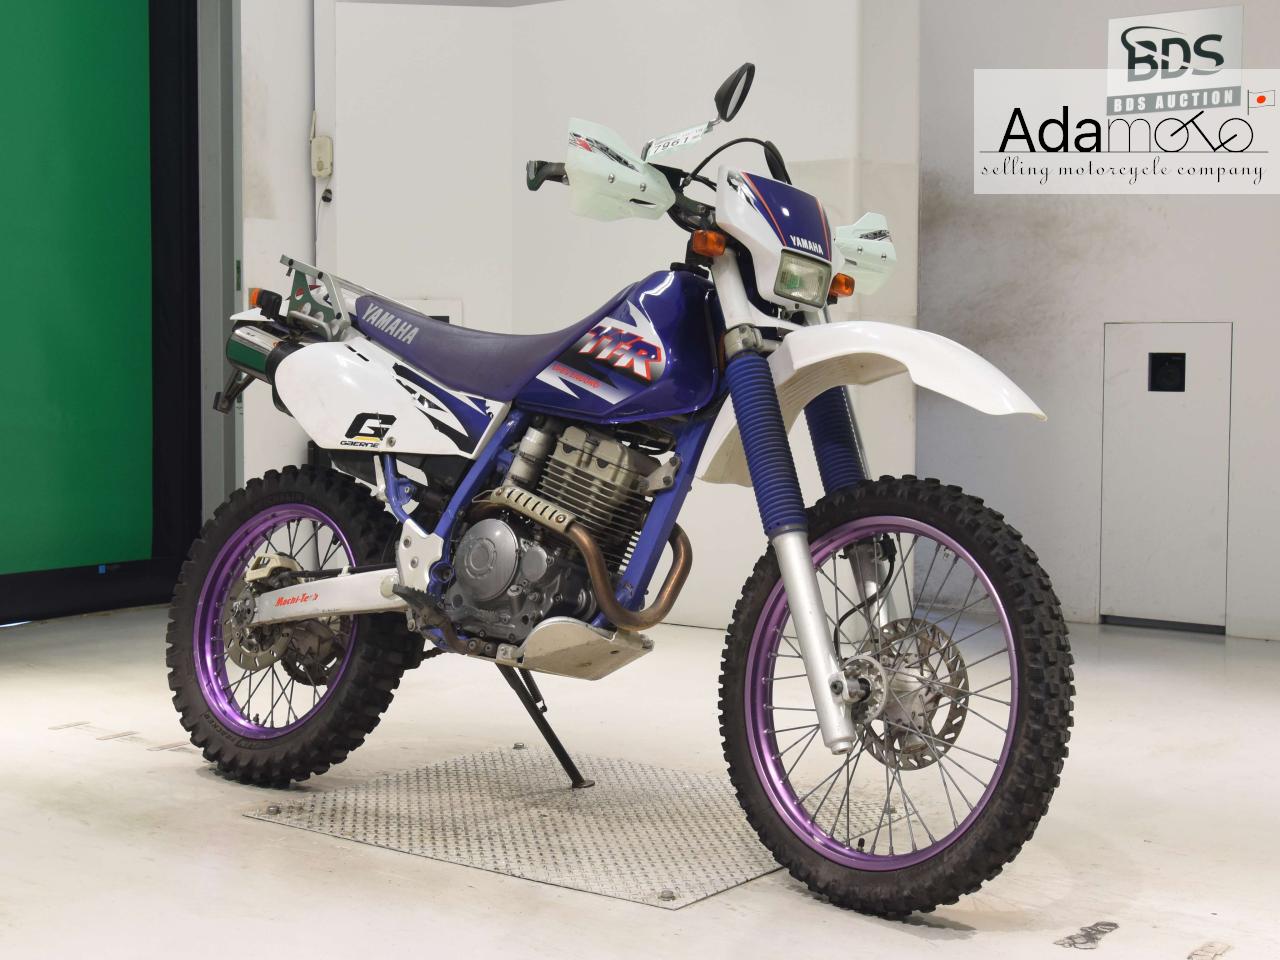 Yamaha TT250R - Adamoto - Motorcycles from Japan